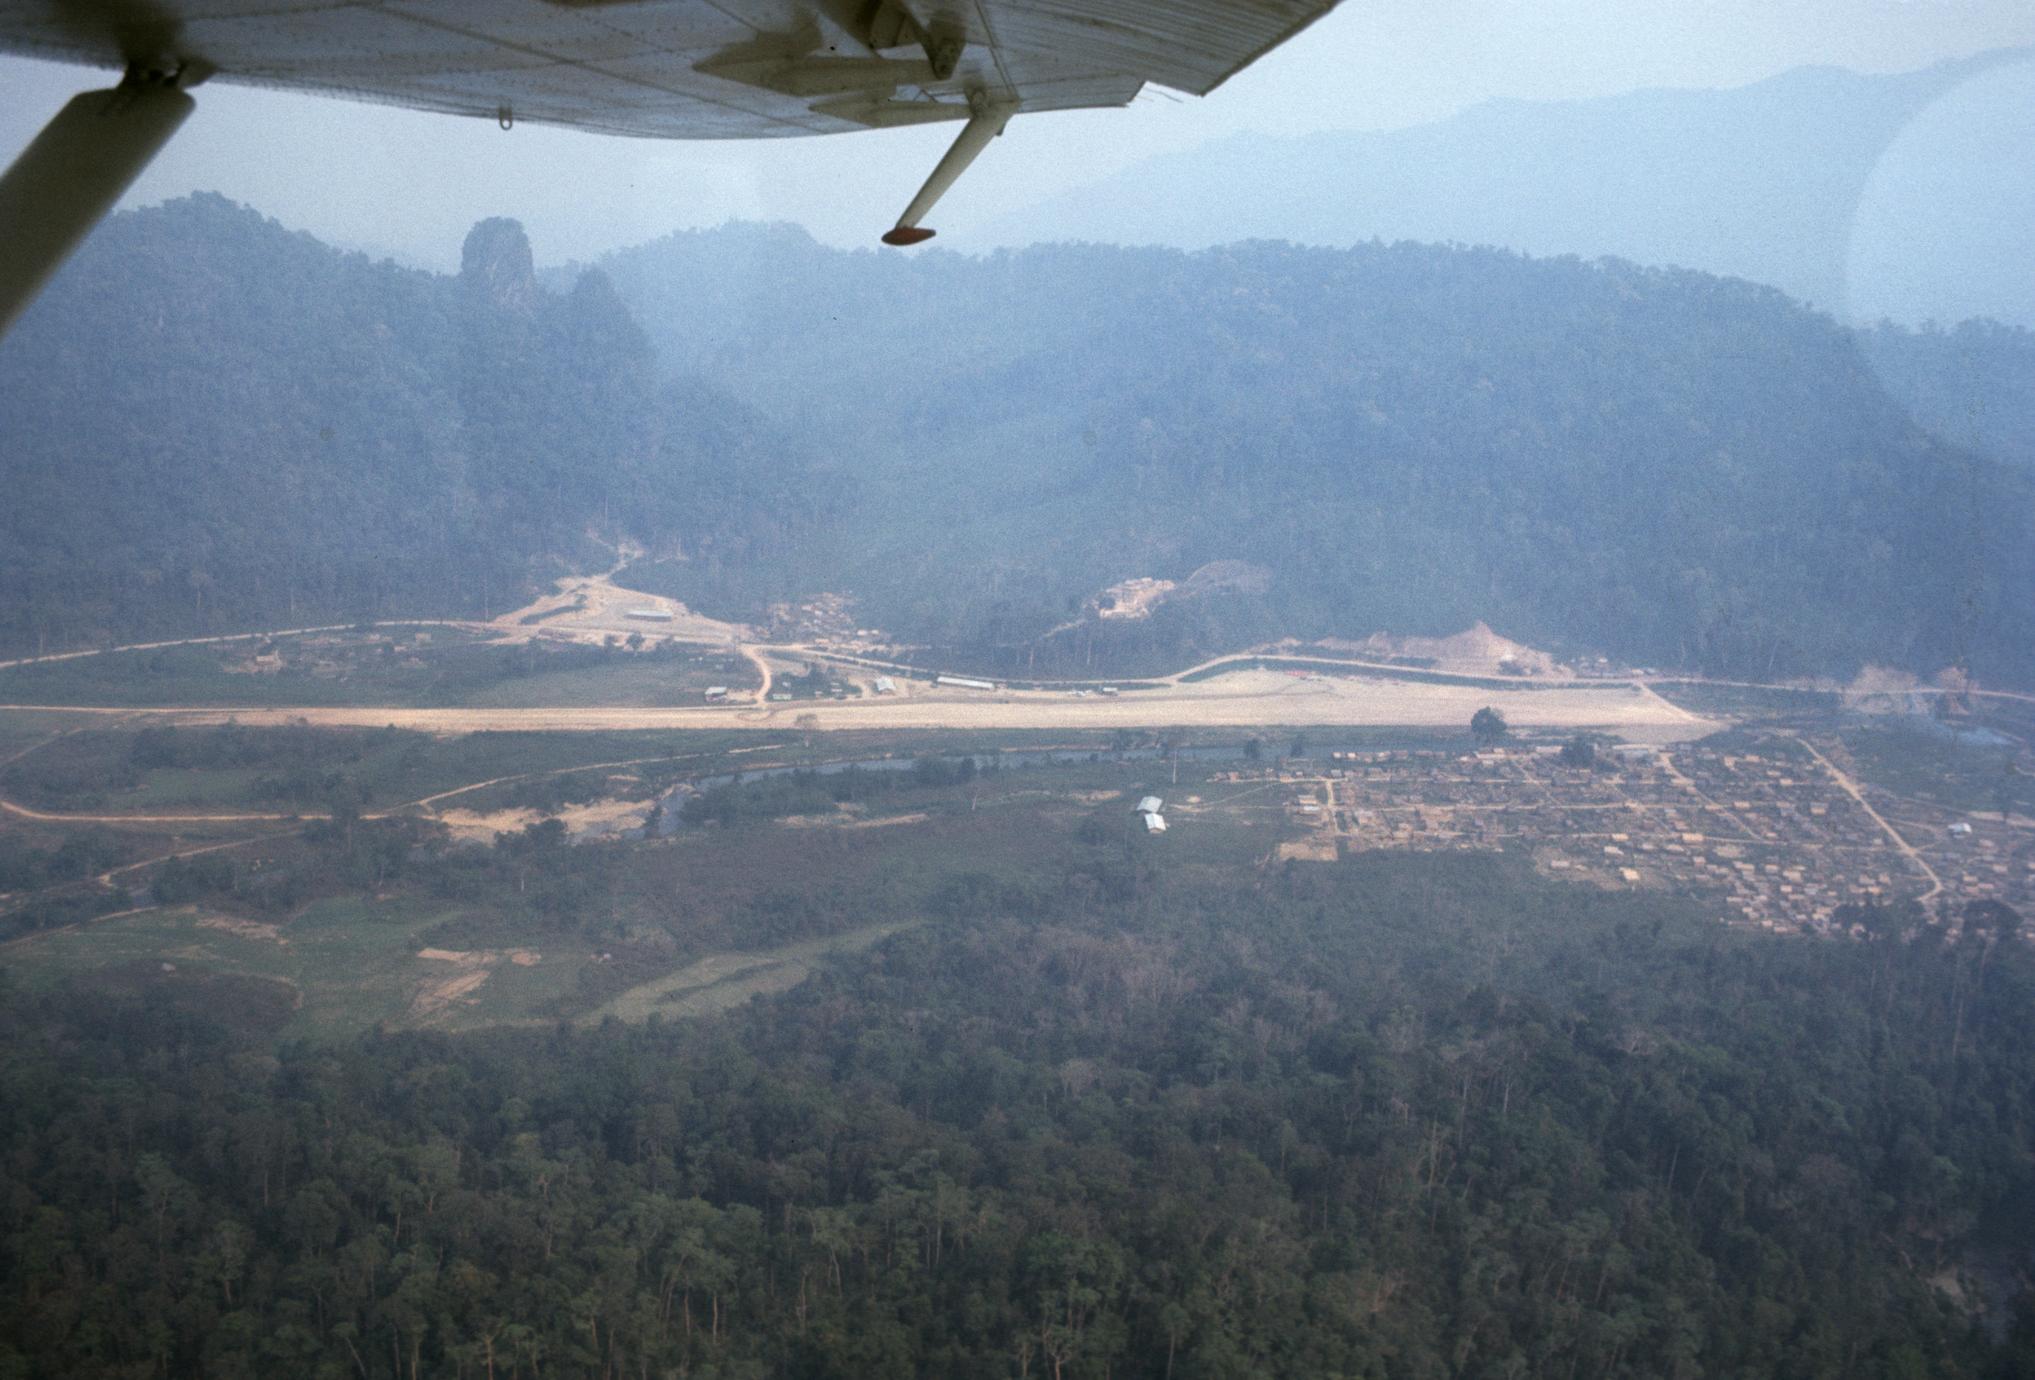 Ban Xon airstrip